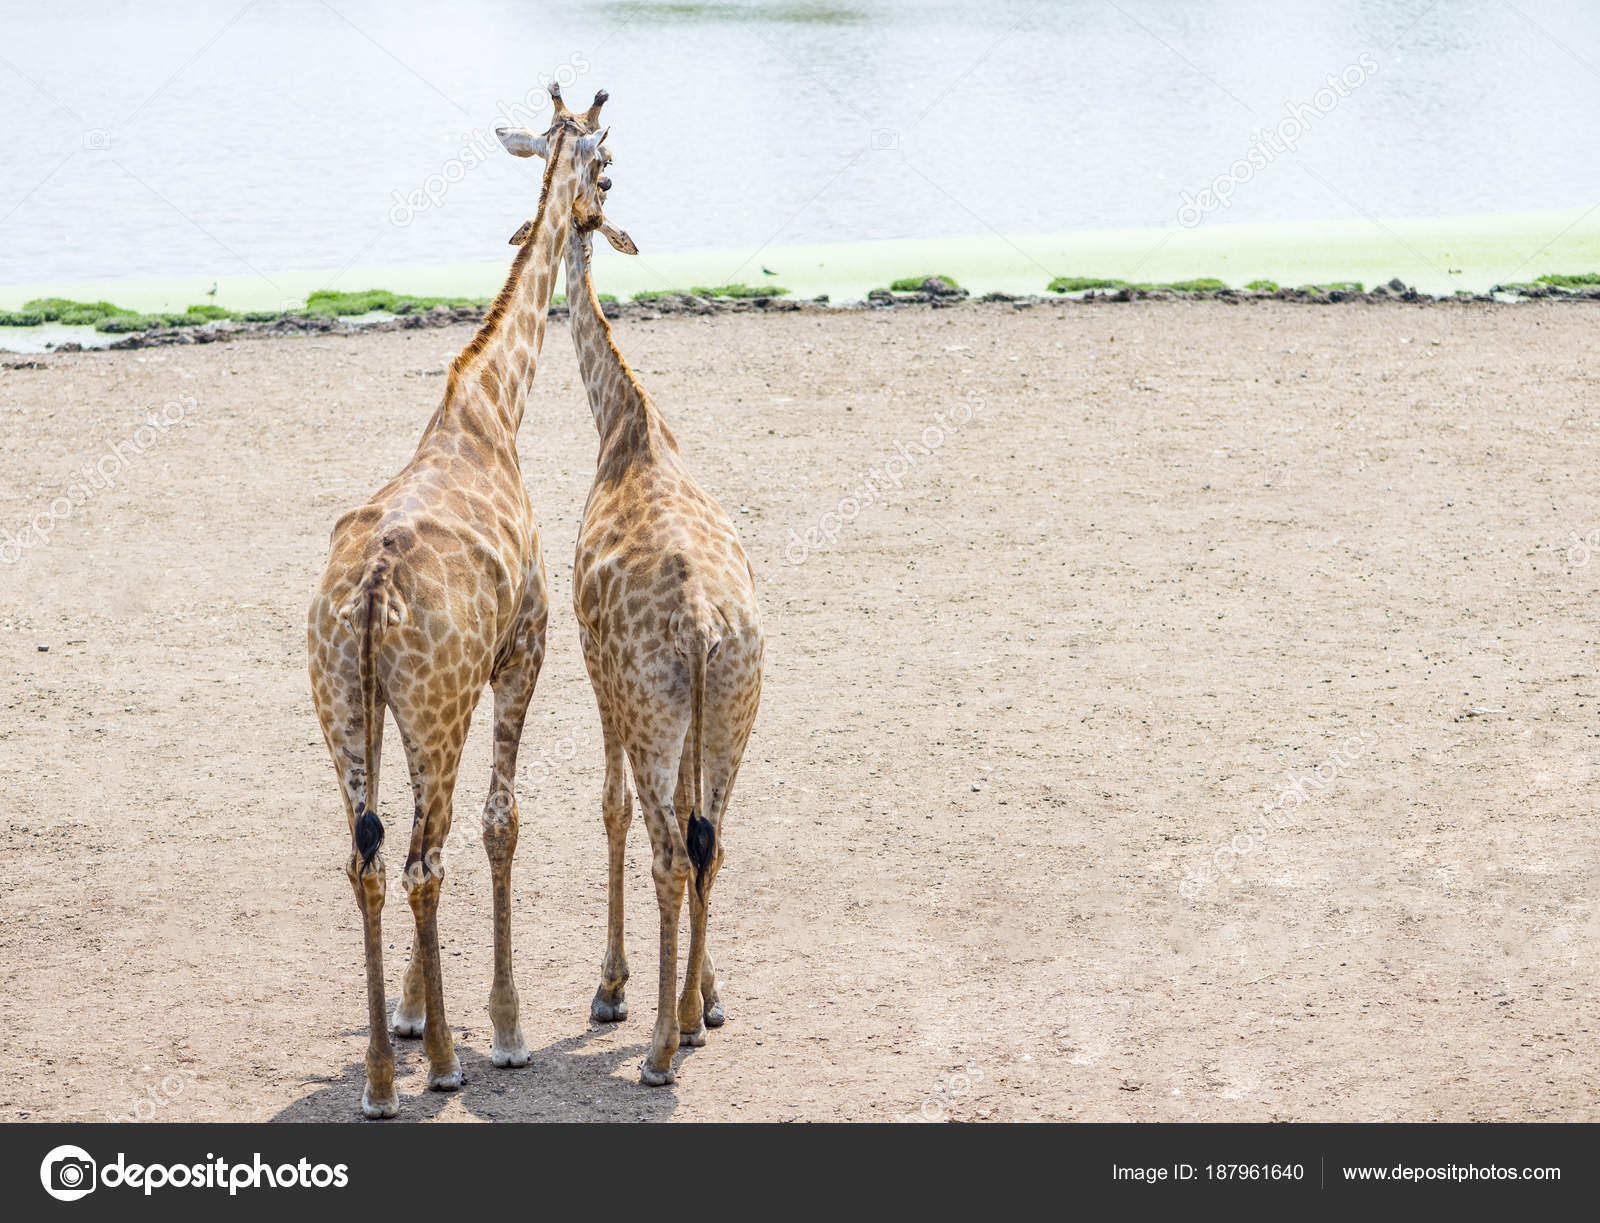 Couple of giraffe standing together — Stock Photo © somdul #187961640